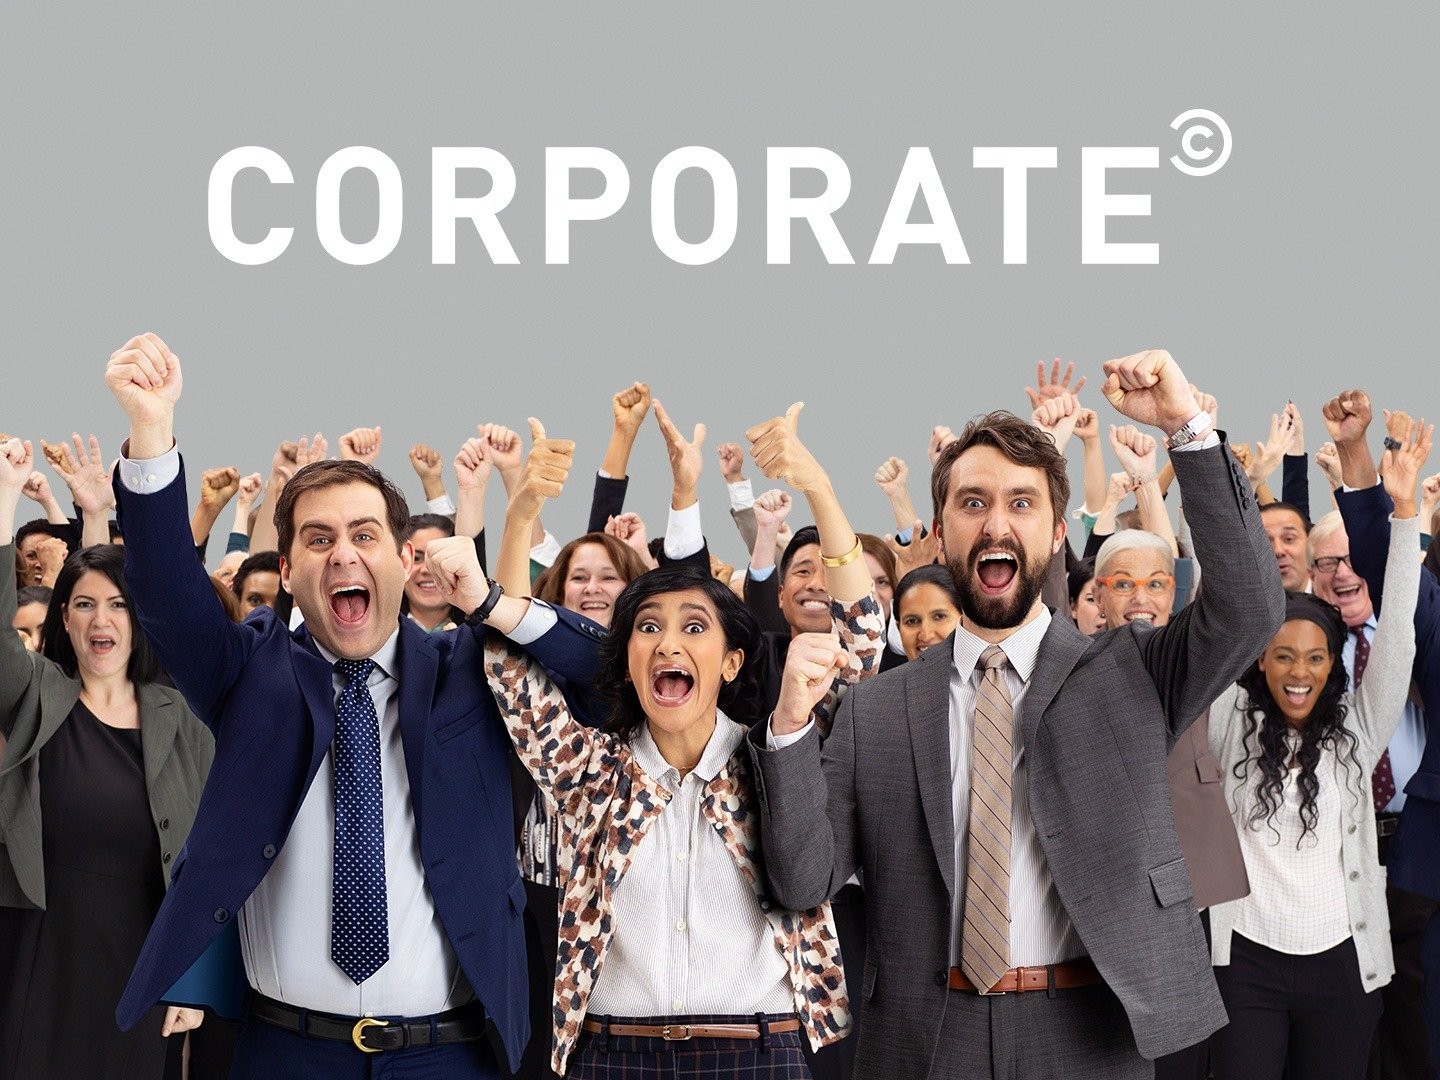 EW's Best of Shows podcast: Lance Reddick talks Corporate